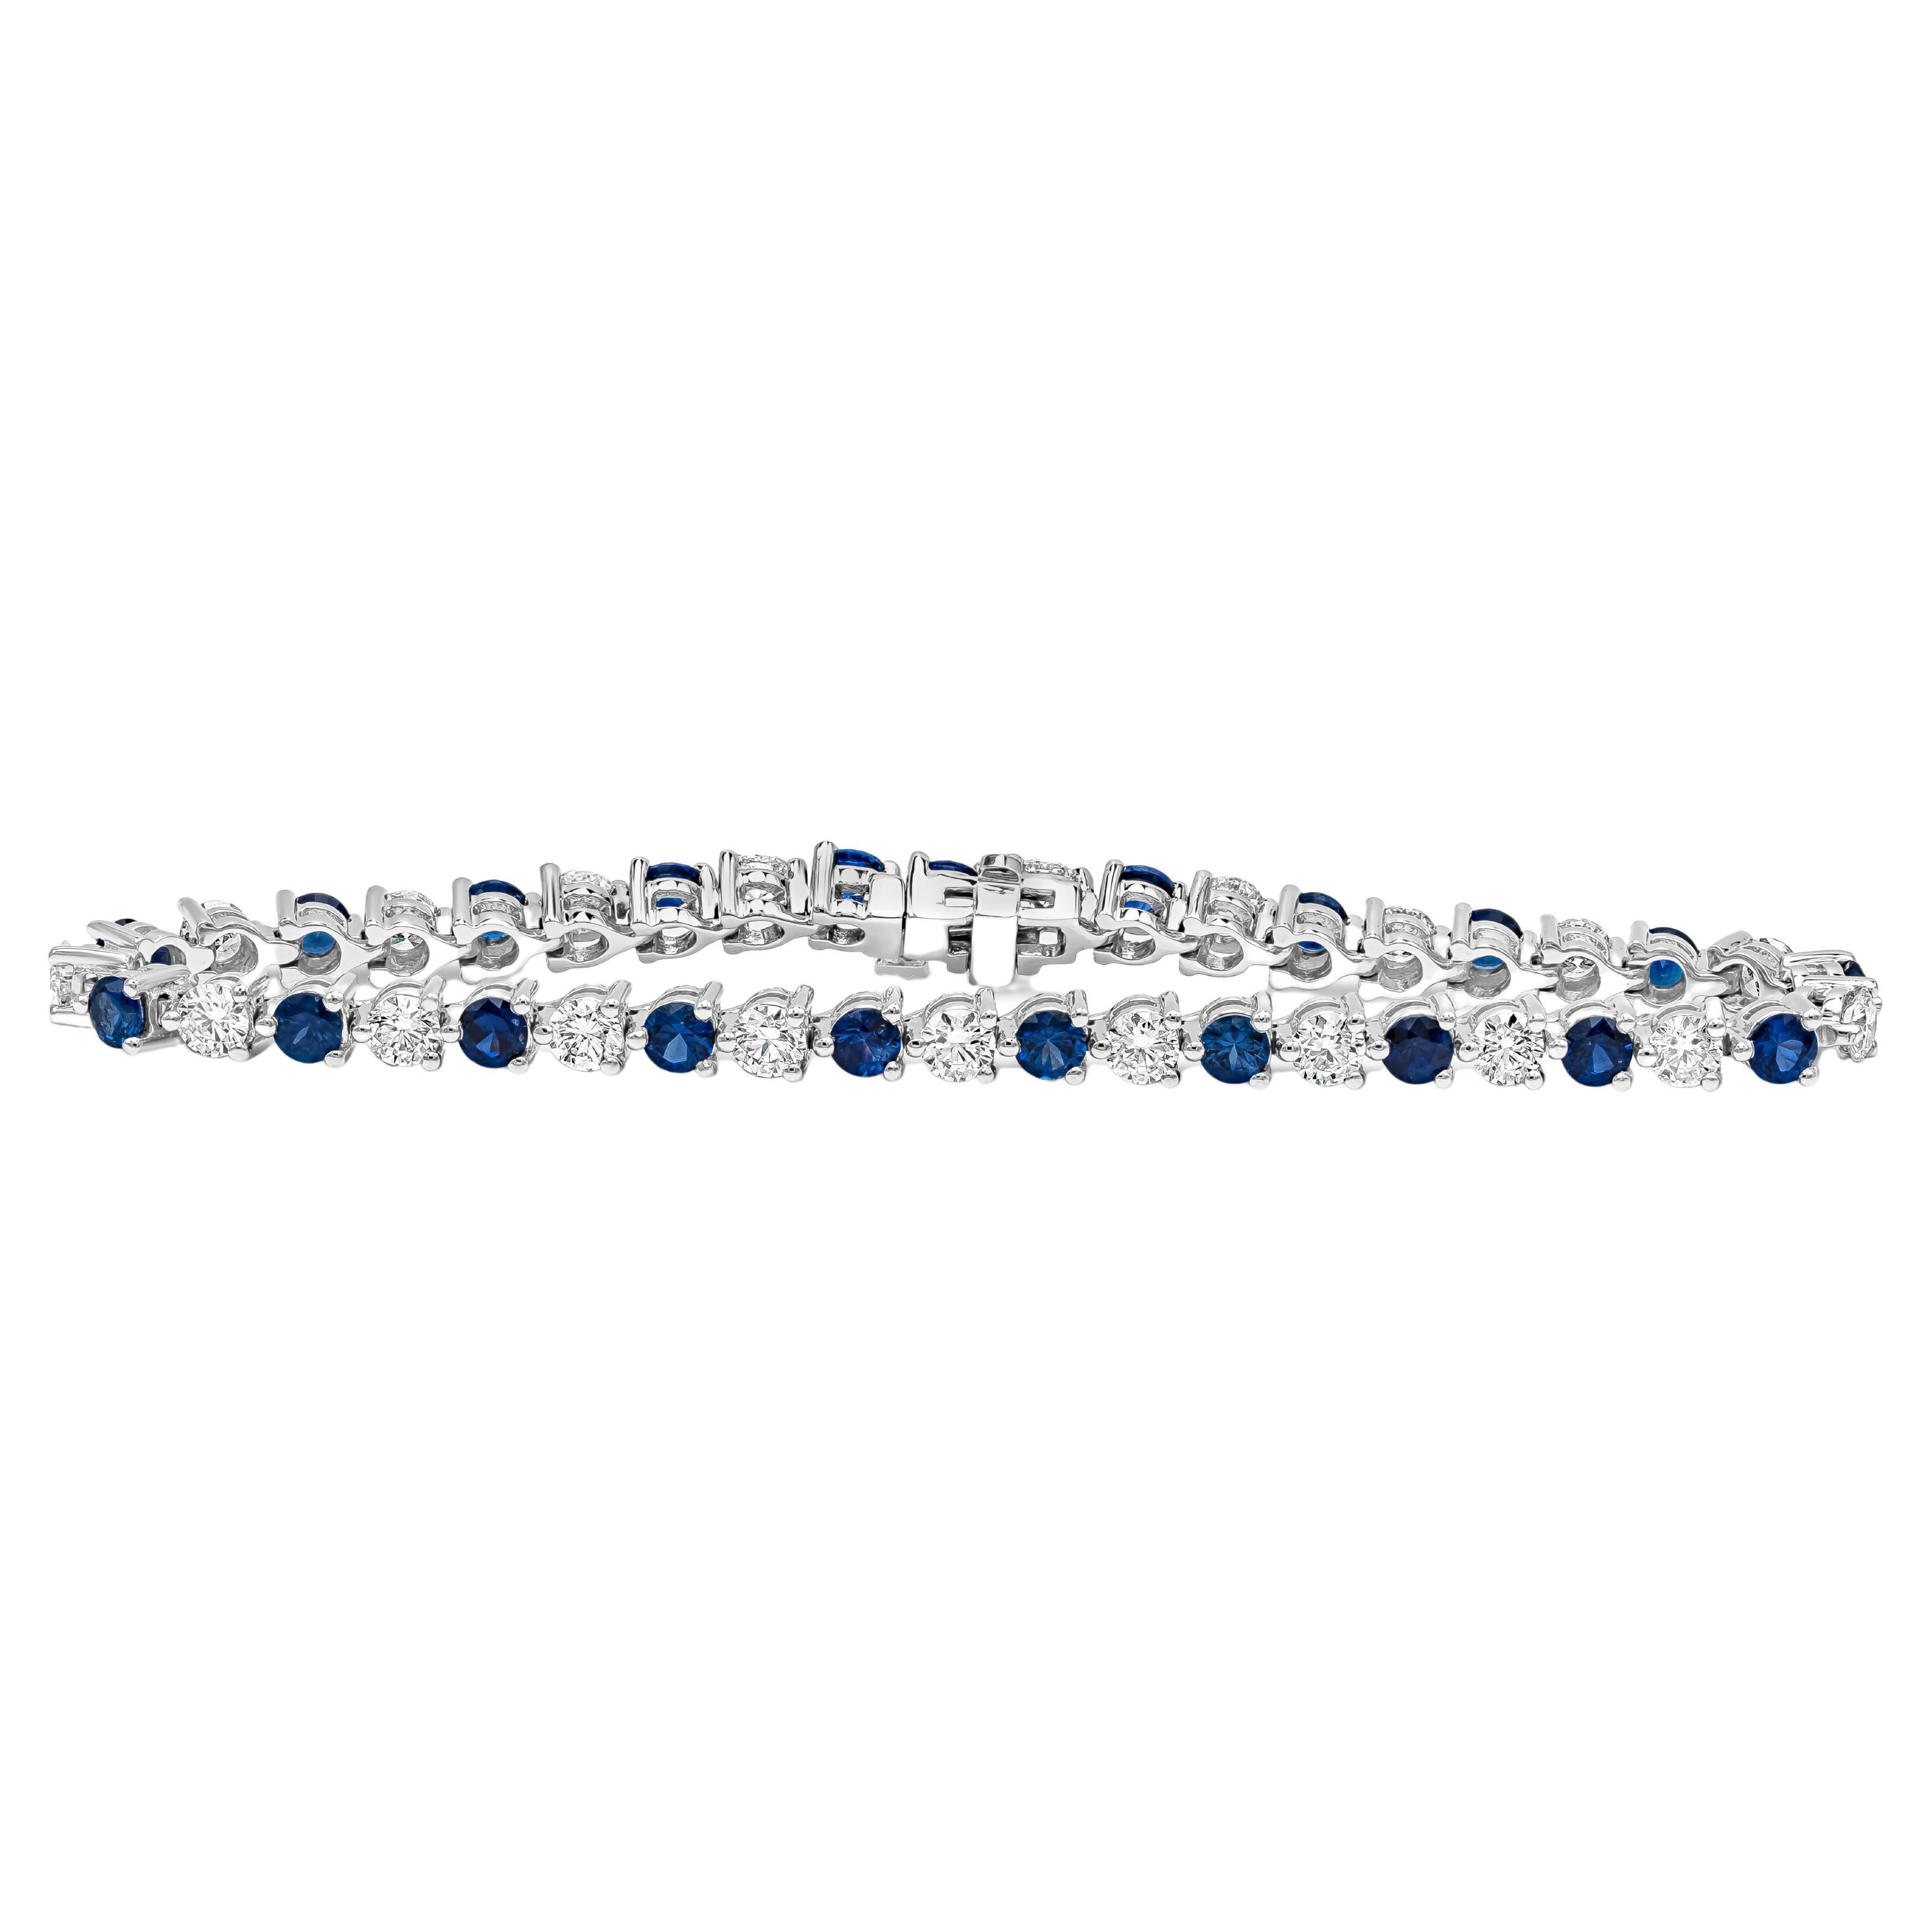 Roman Malakov 7.54 Carats Alternating Blue Sapphire and Diamond Tennis Bracelet